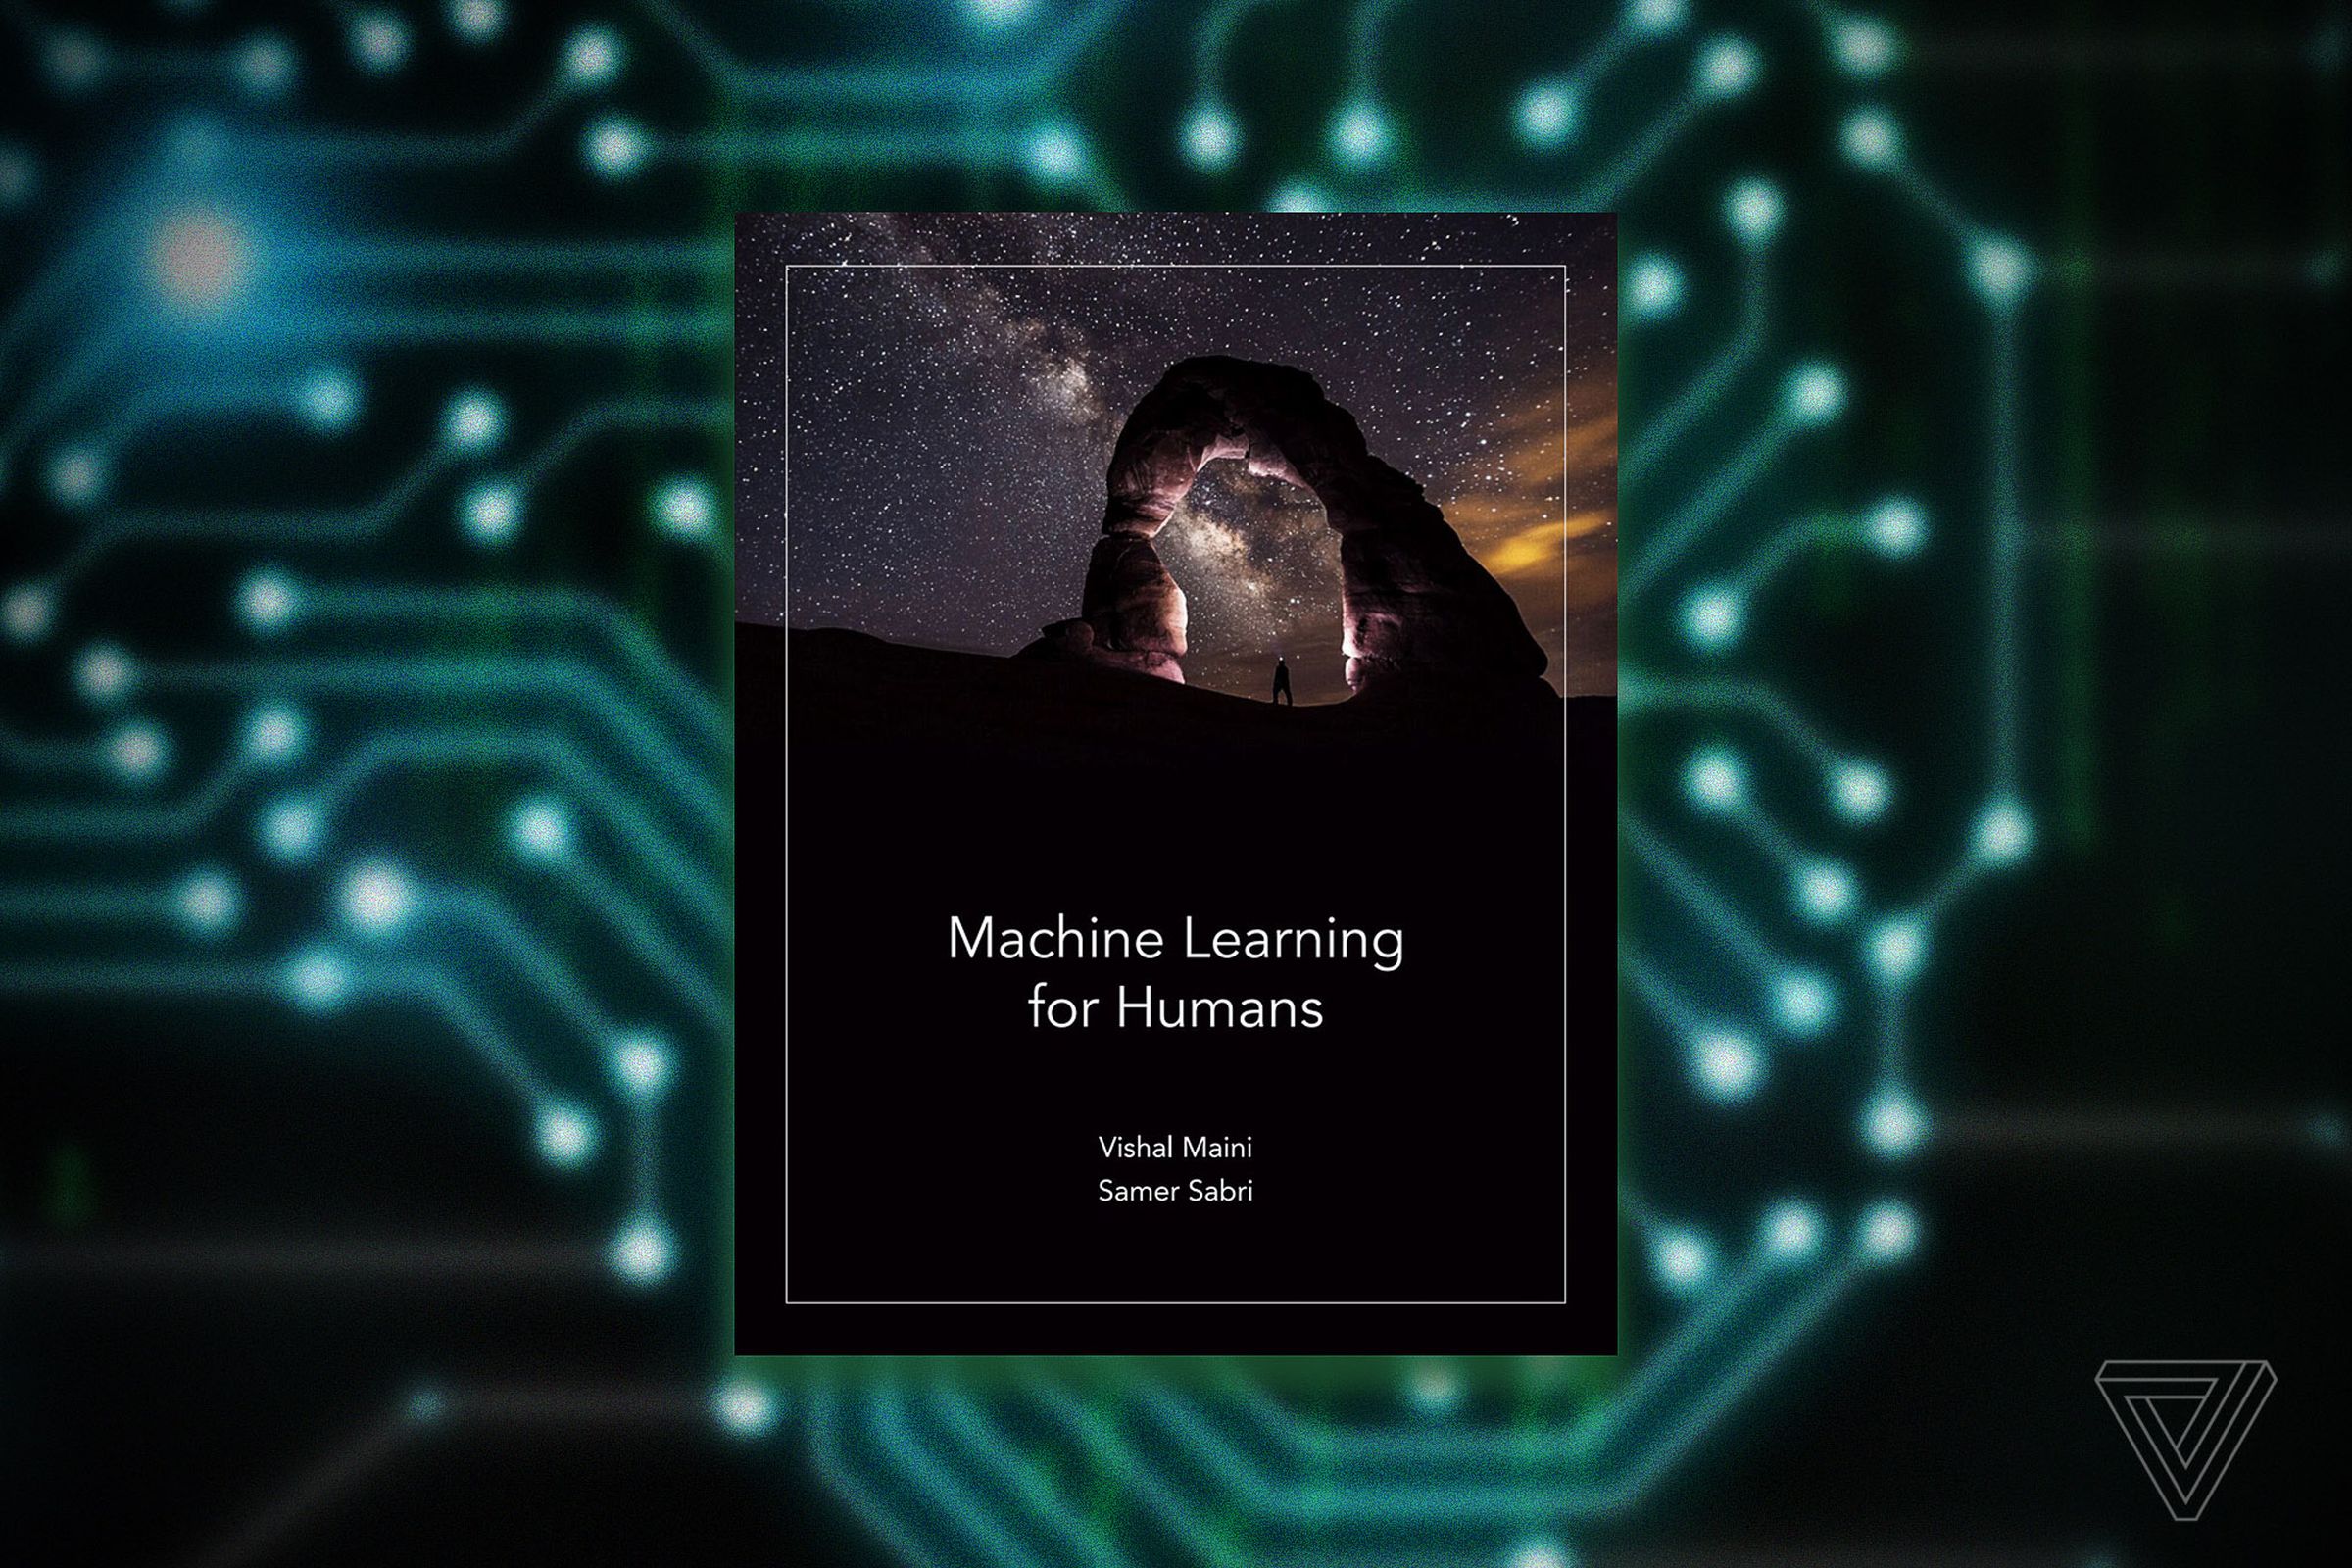 Machine Learning for Humans, by Vishal Maini and Samer Sabri 